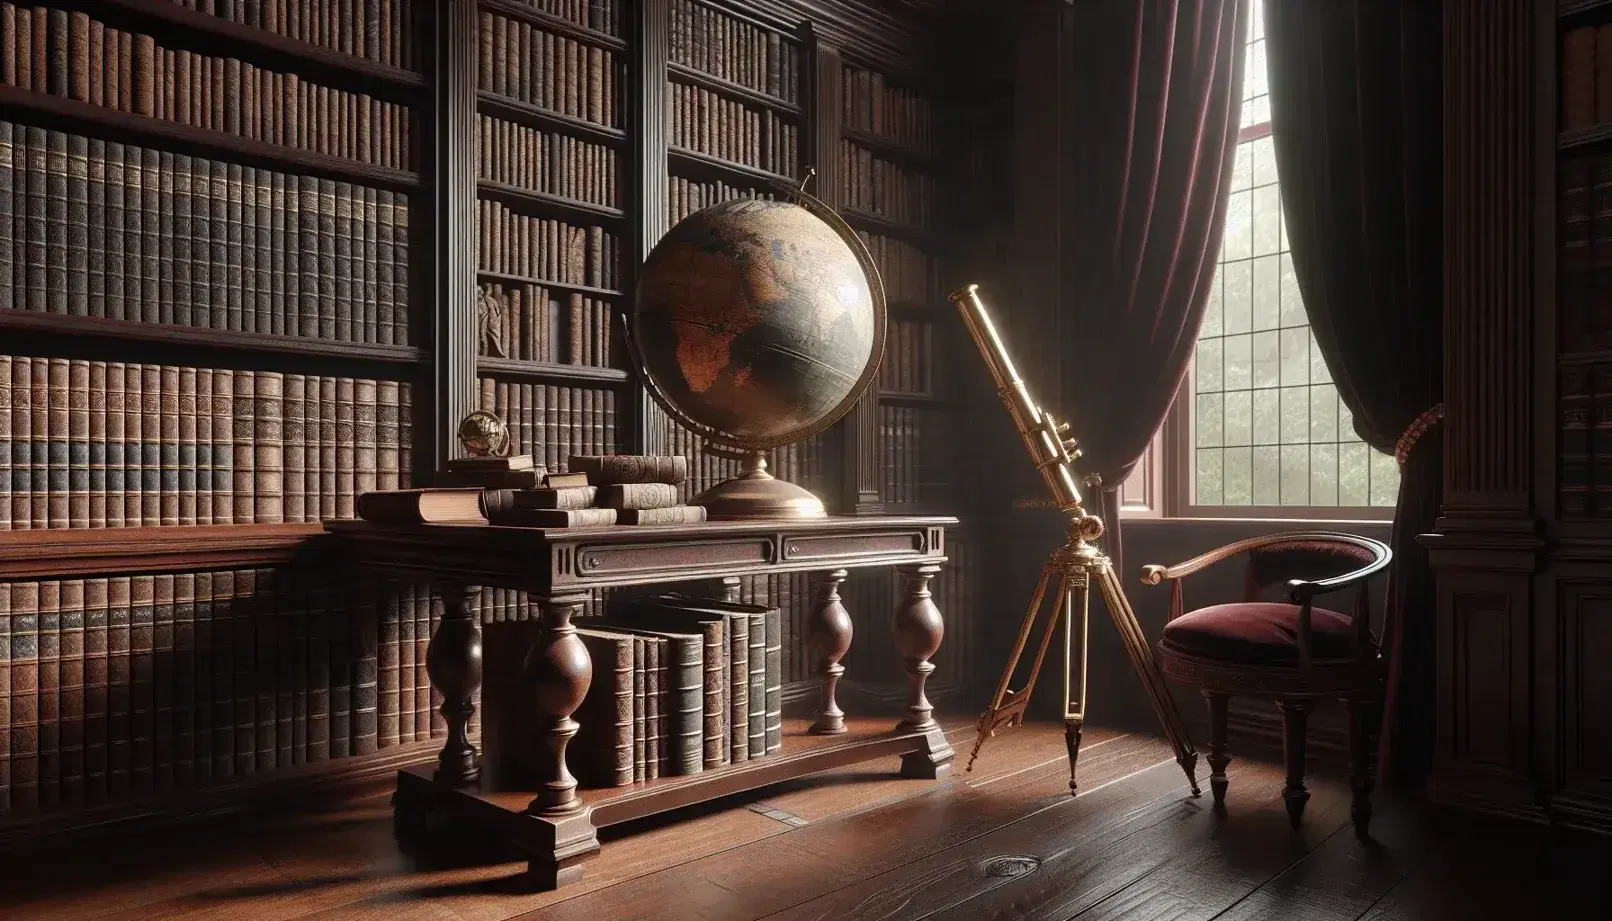 Biblioteca antigua con estantes de madera oscura llenos de libros, mesa central con globo terráqueo antiguo y telescopio de latón, silla con cojín rojo y cortinas de terciopelo.